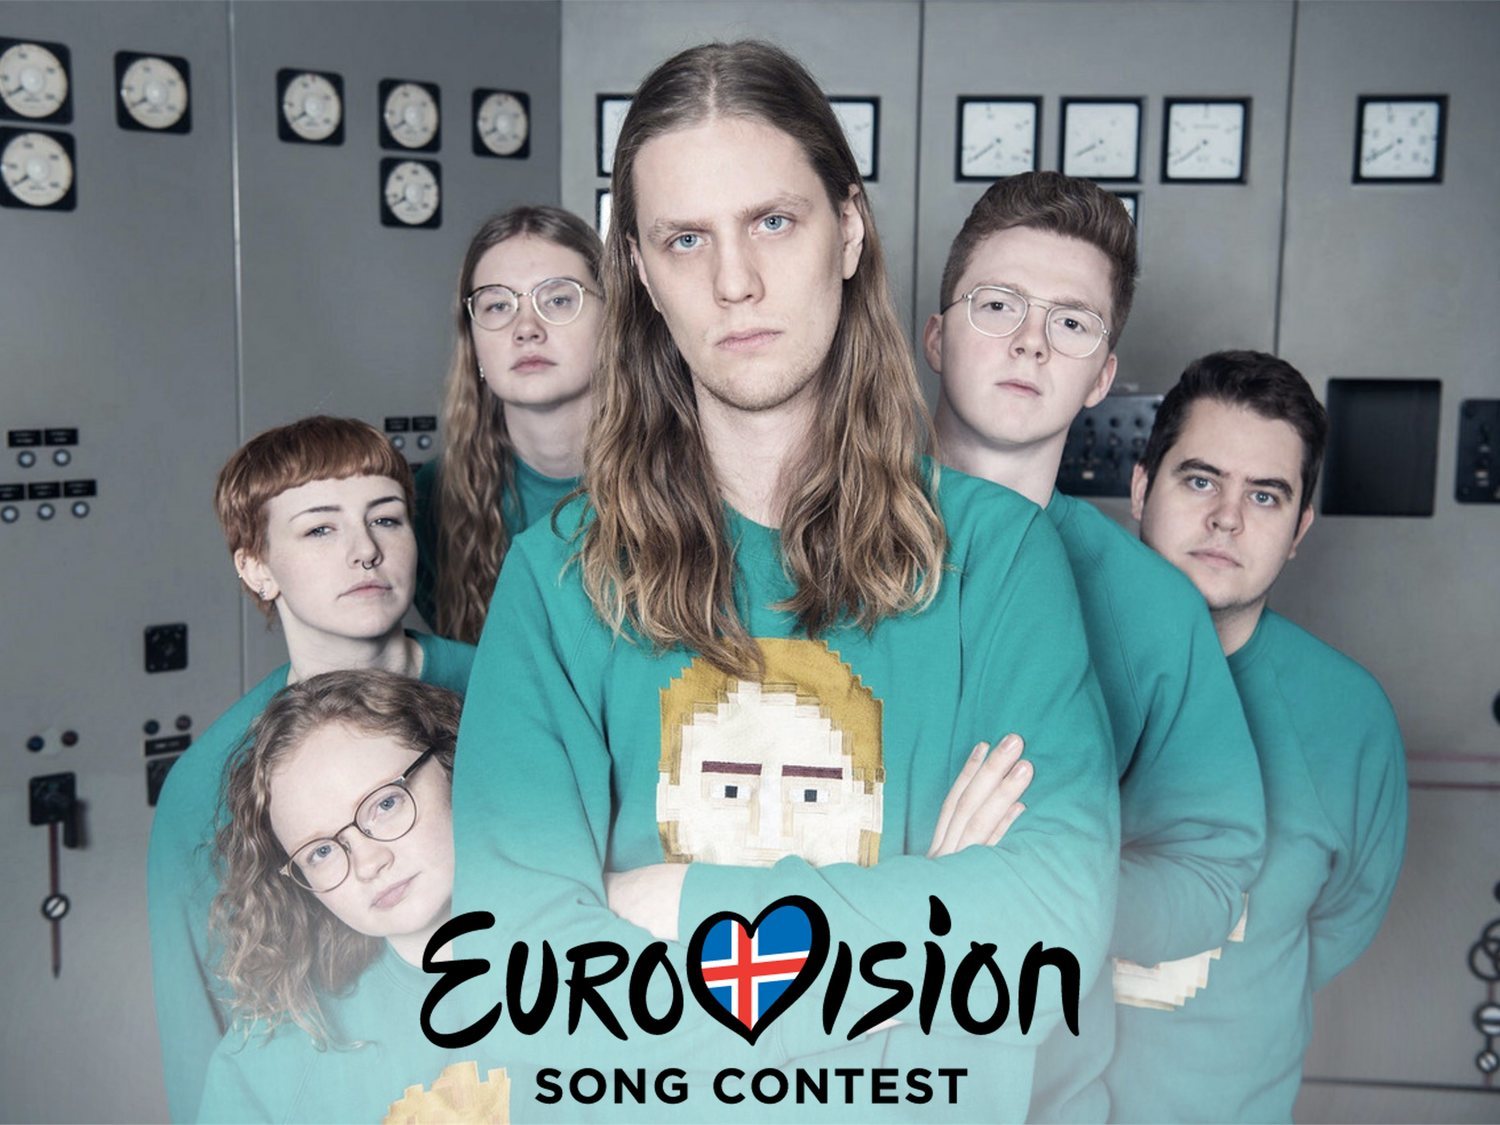 Dadi & Gagnamagnid, representantes de Islandia en Eurovisión 2020 con 'Think About Things'